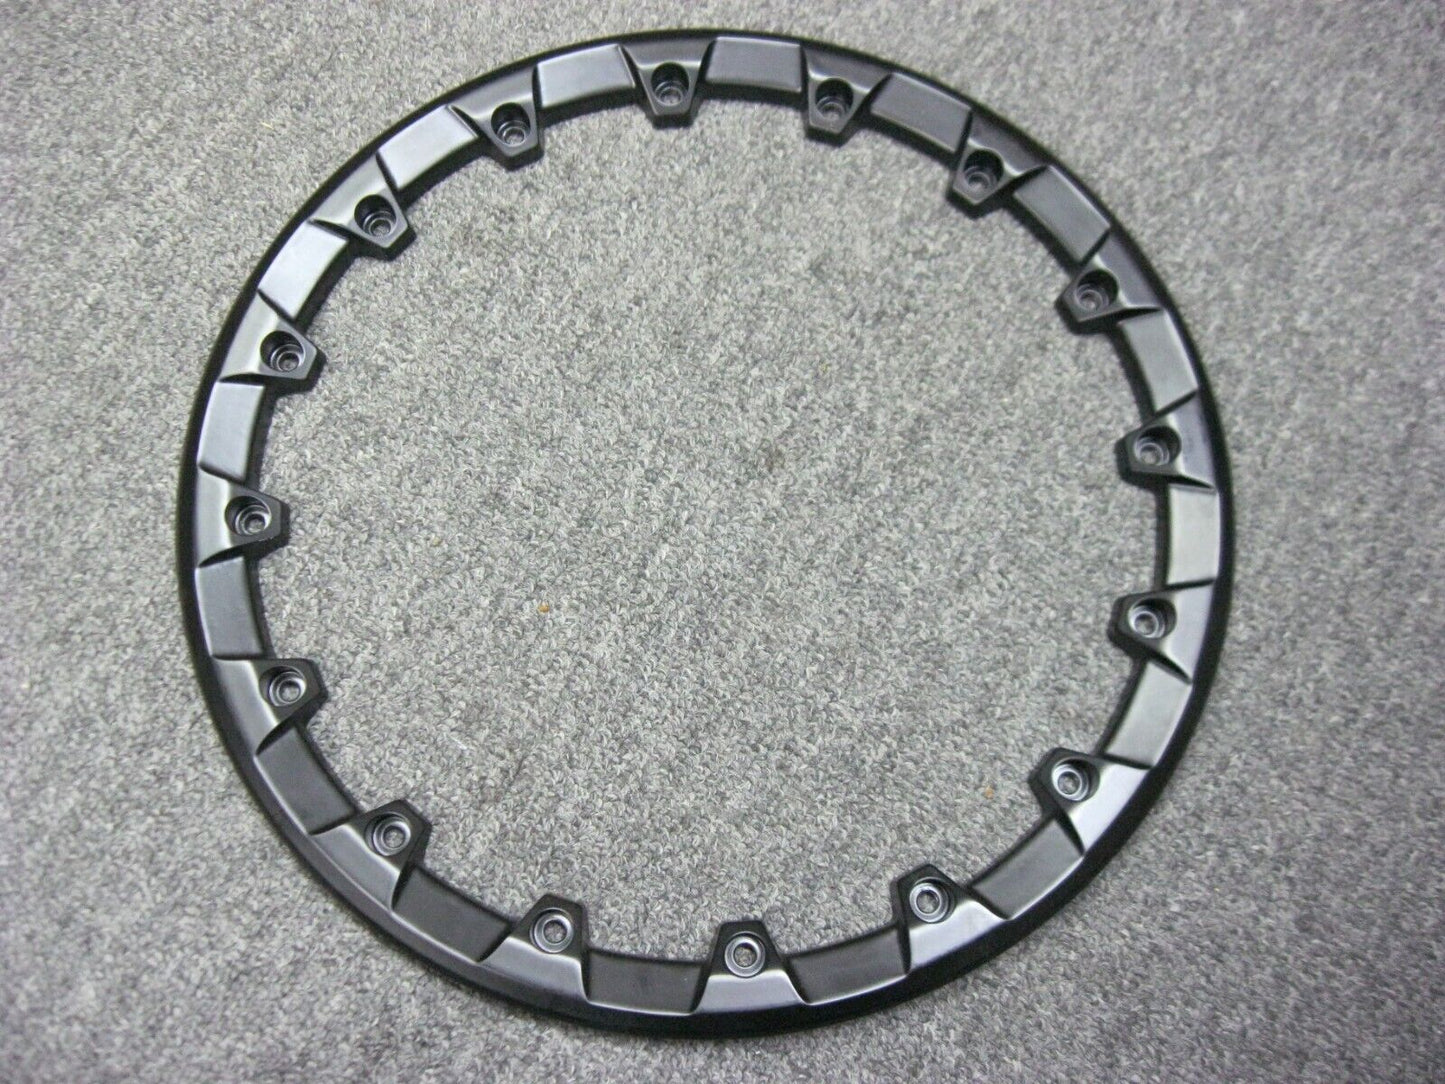 14" Wheel Bead Lock Ring off 2016 Artic Cat Alterra 700